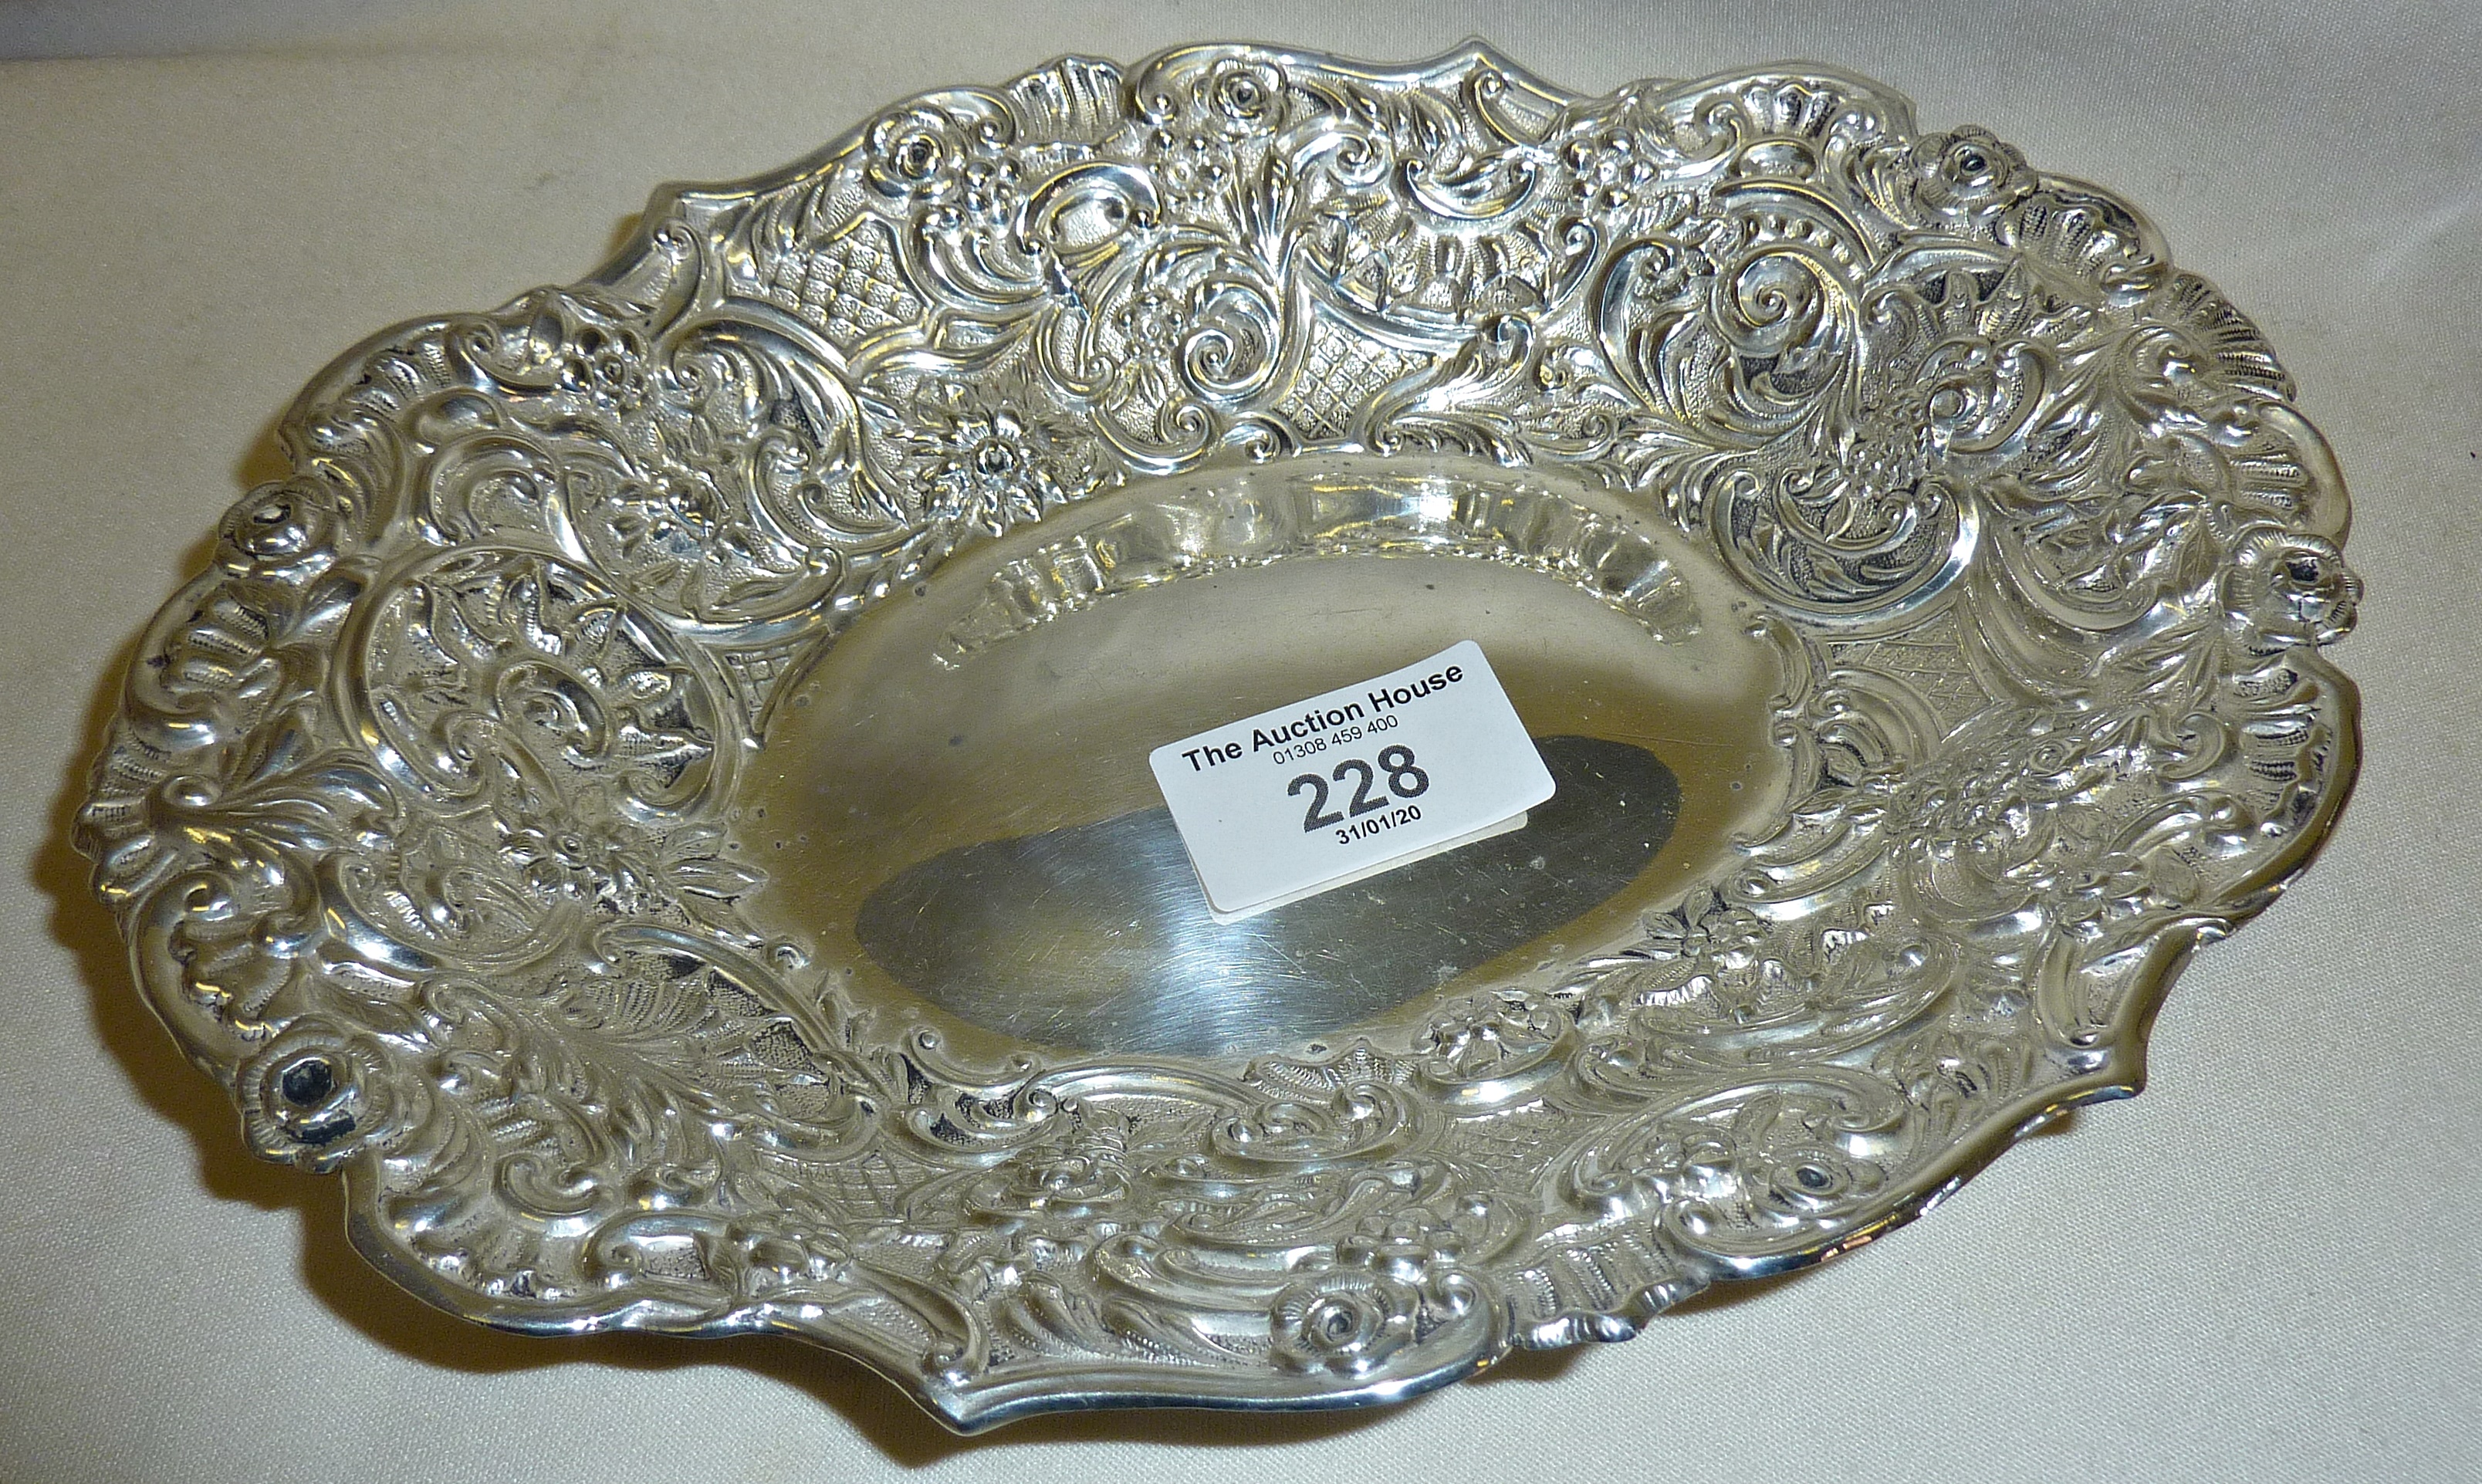 Victorian silver bon bon dish decorated with a foliate repoussé design. Hallmarked for London